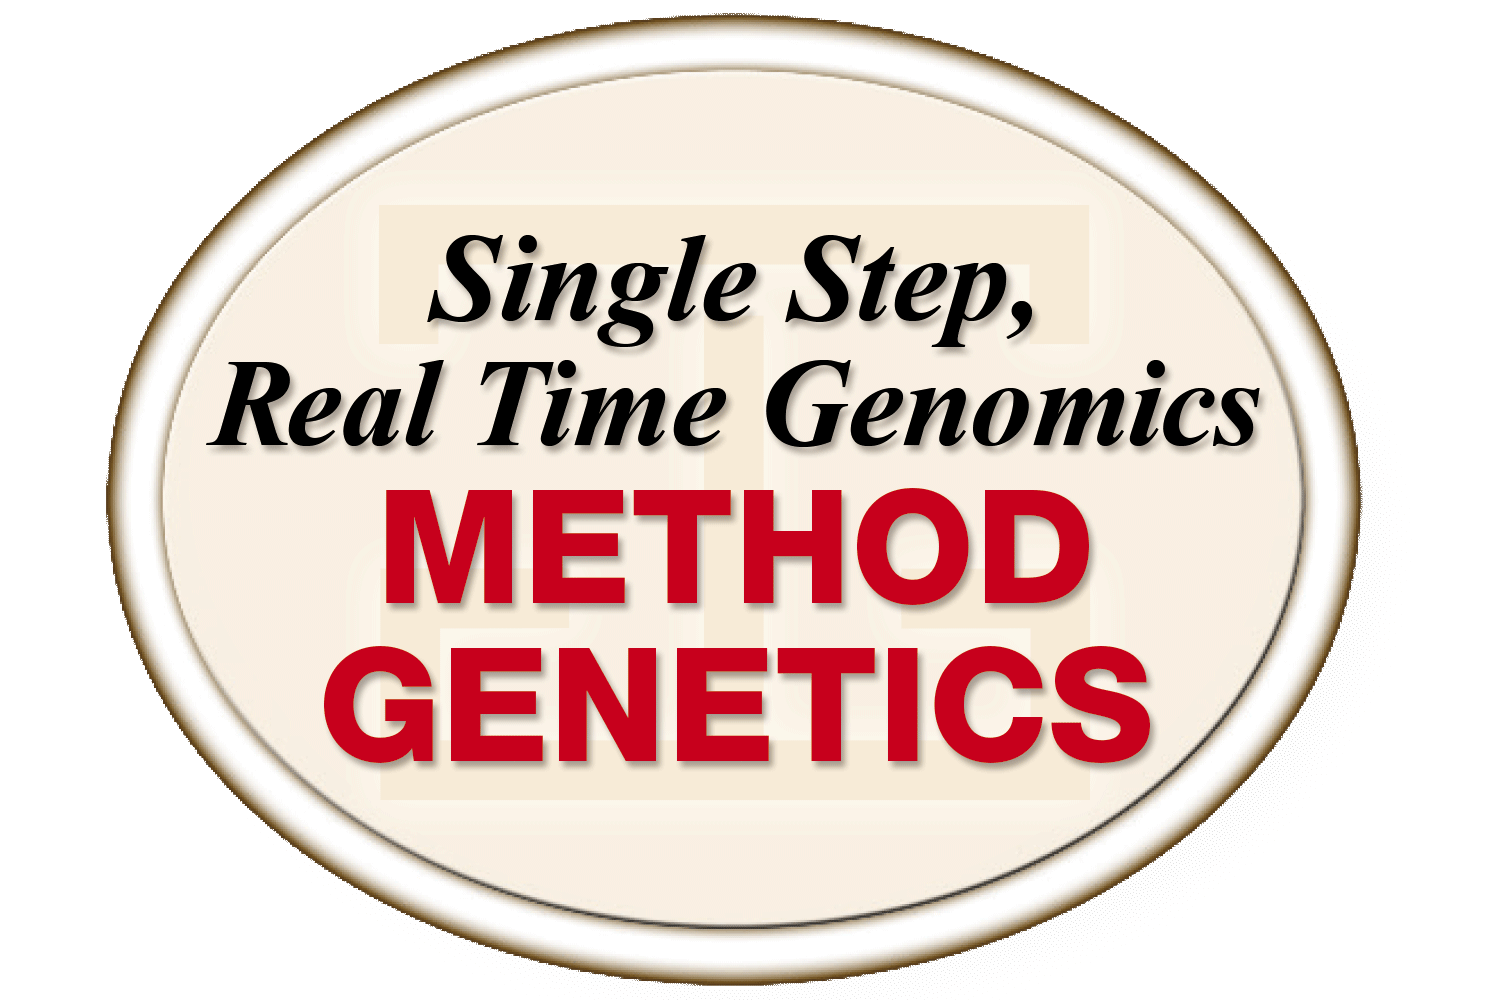 Single Step Real Time Genomics